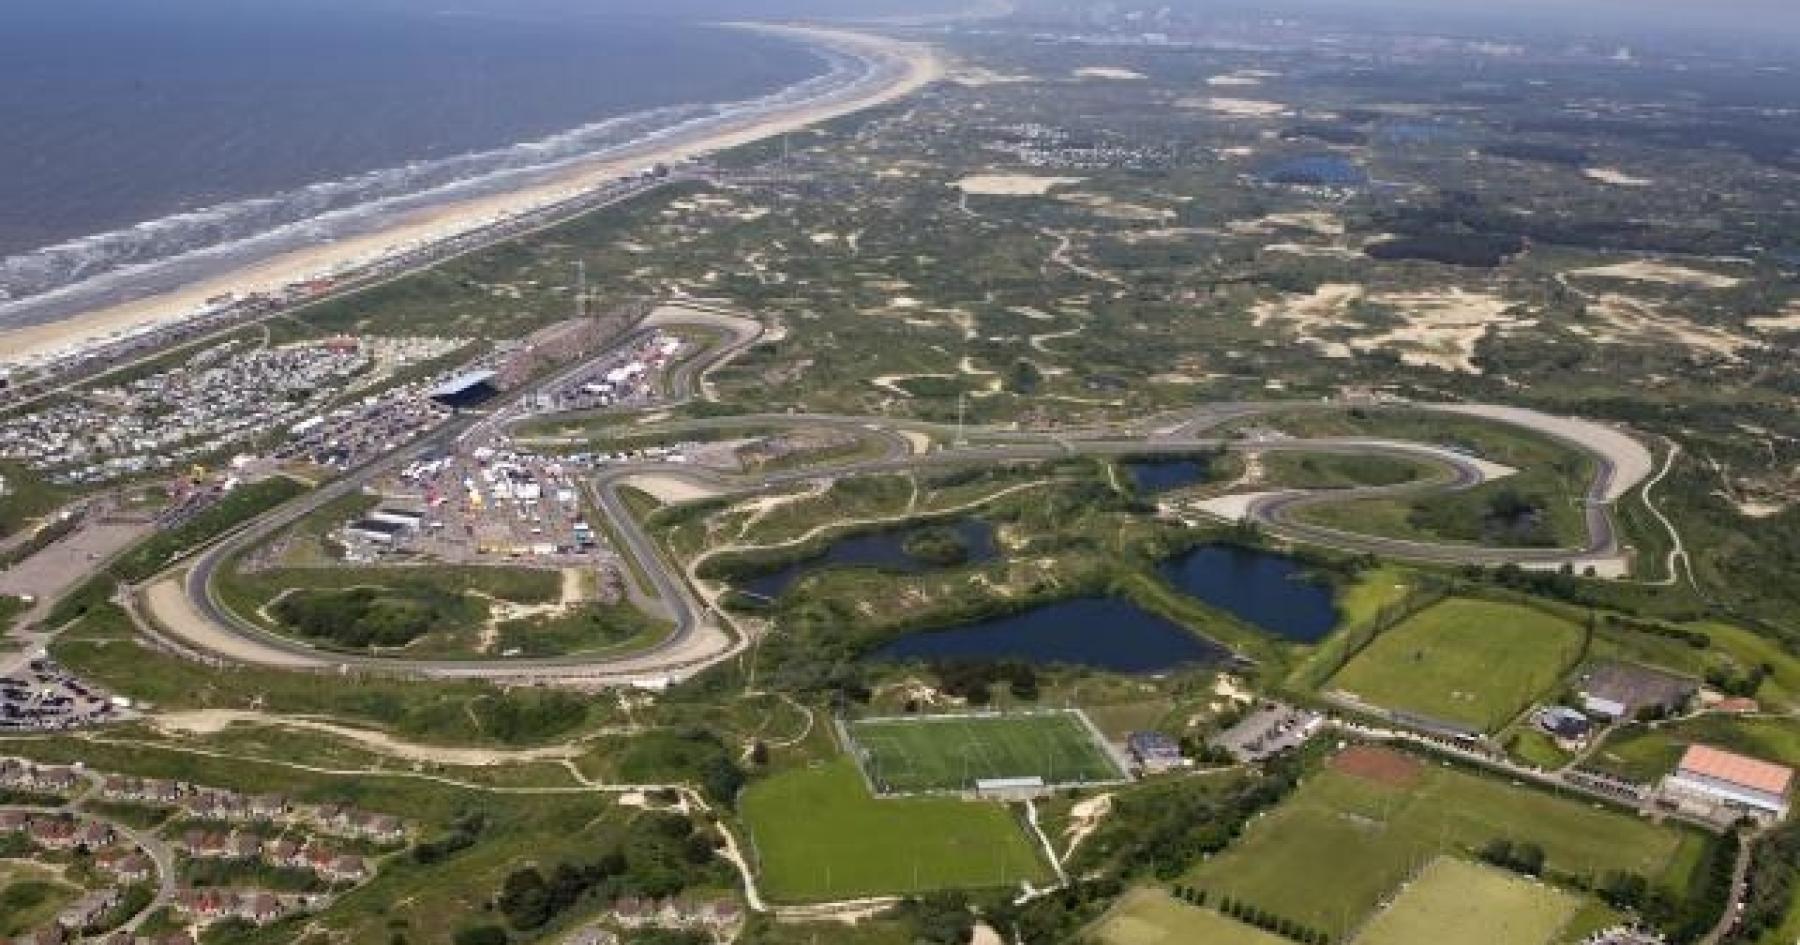 Unleashing the Speed: Rising Star Shines at Zandvoort Test